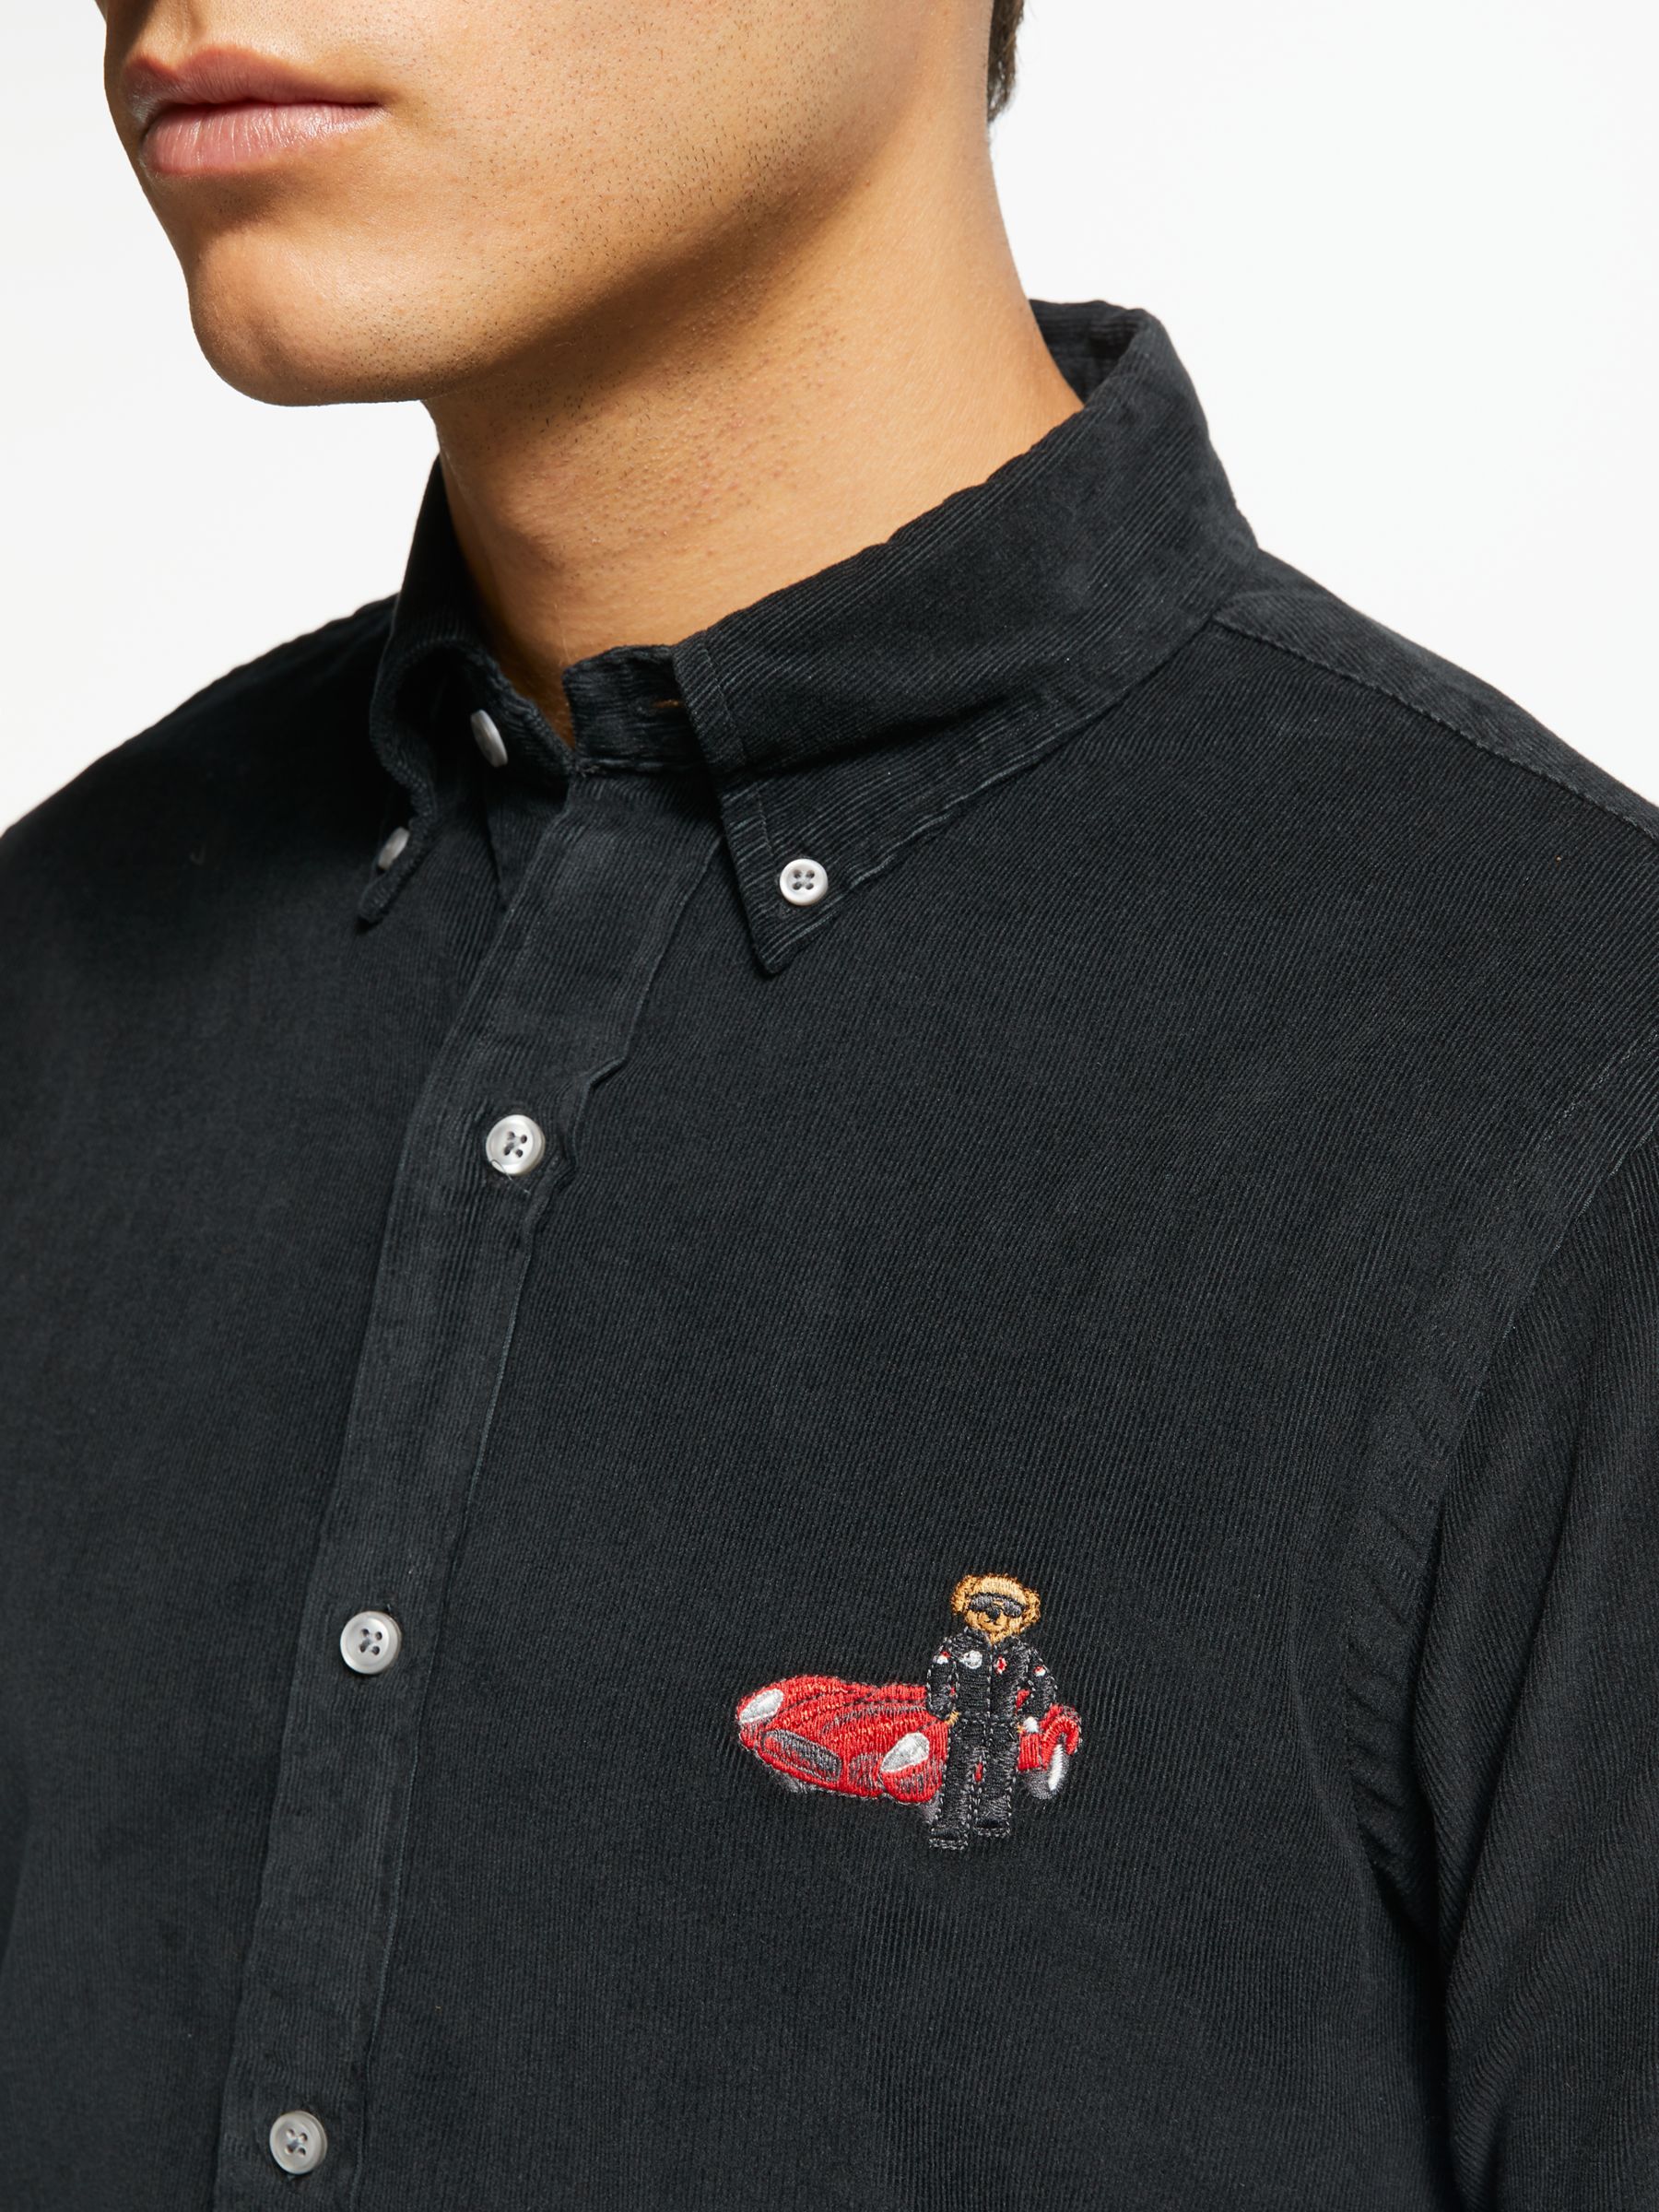 polo bear shirt black